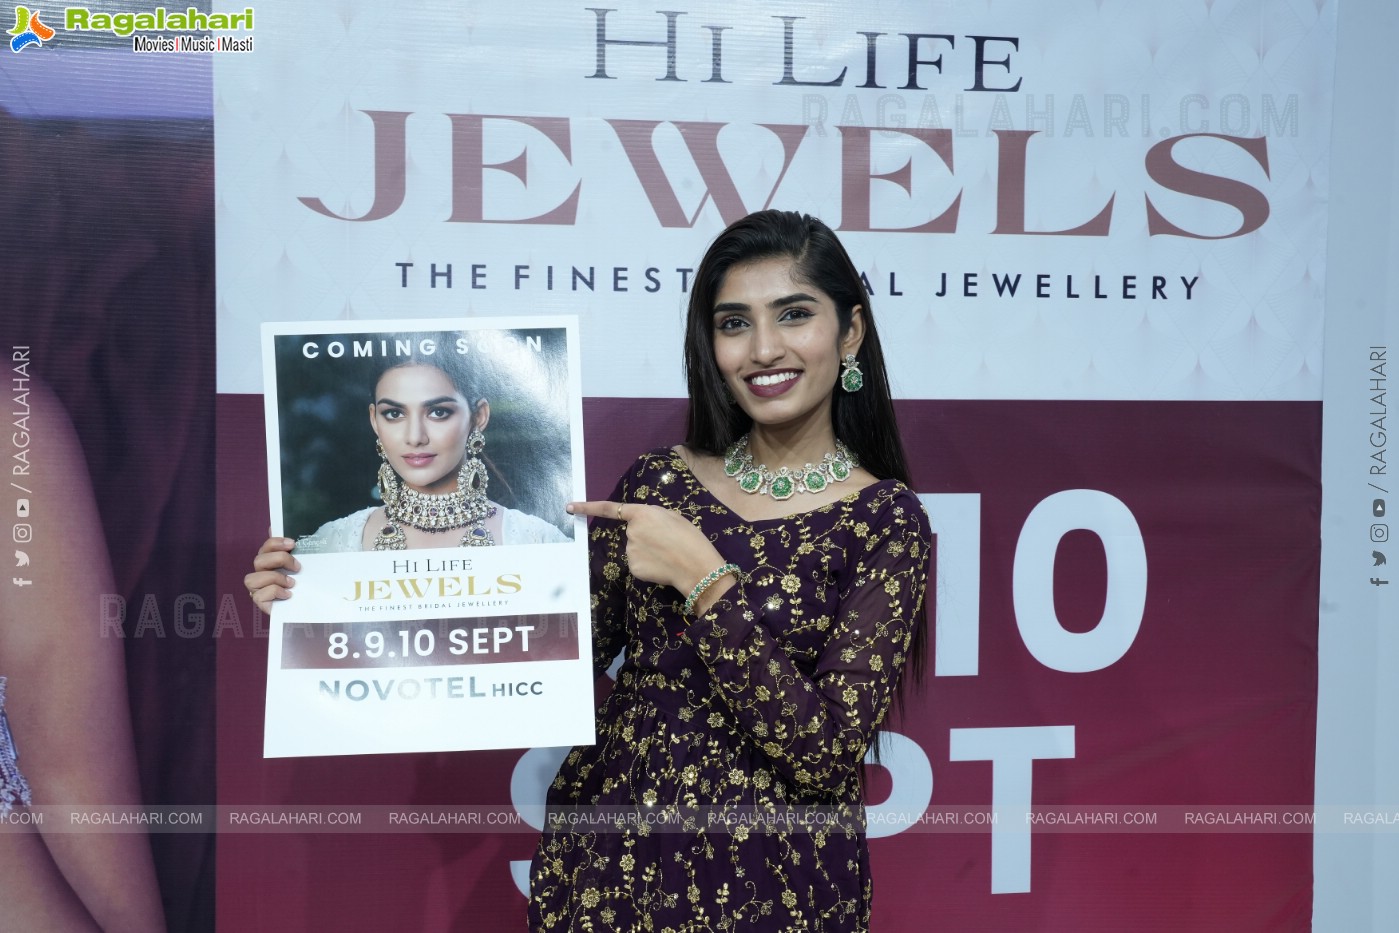 Hi Life Jewels Showcase Date Announcement Event